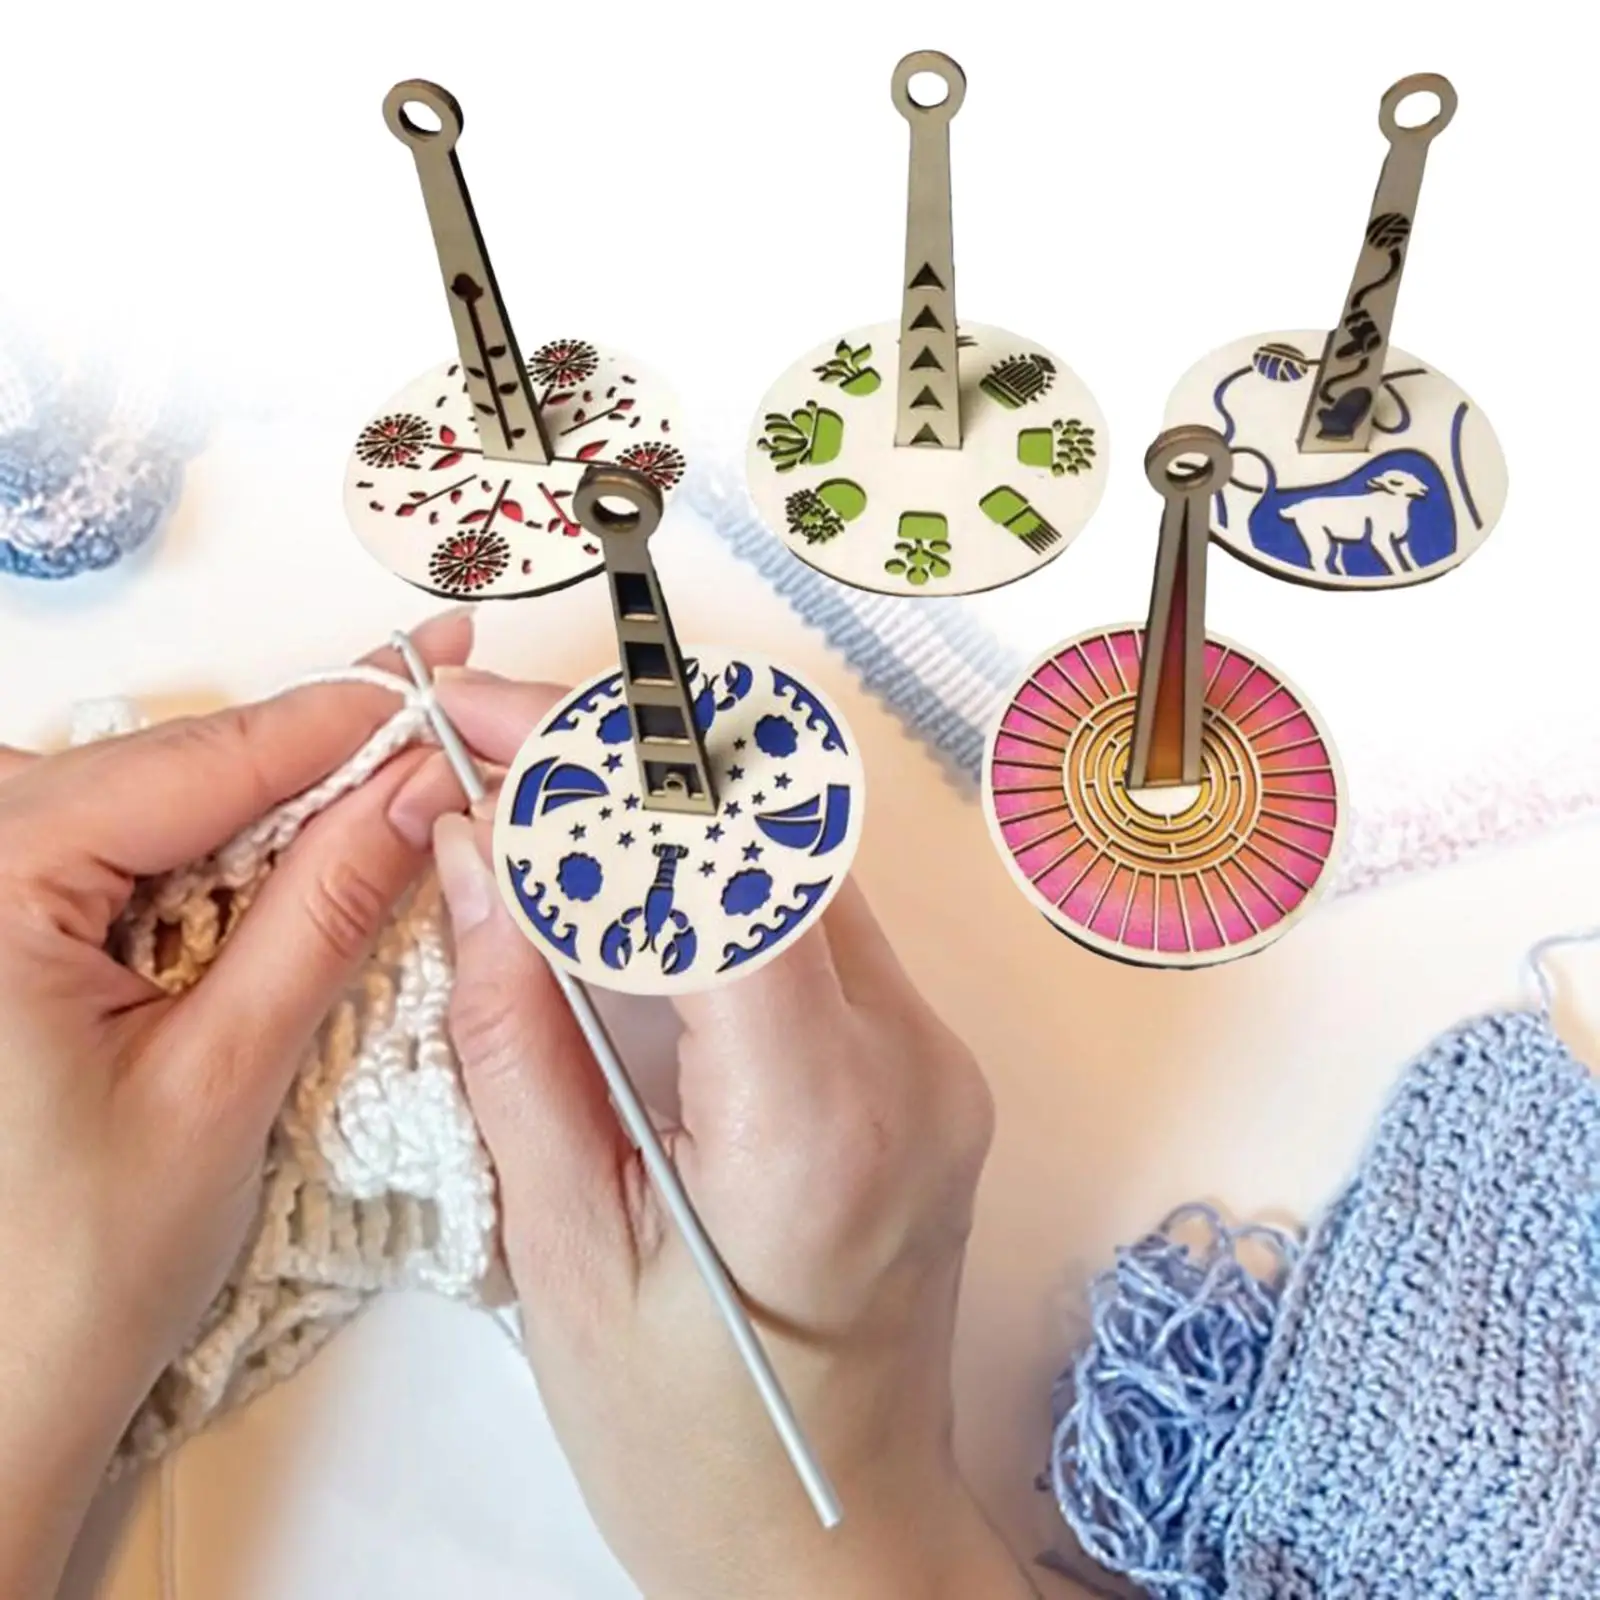 5Pcs Wrist Yarn Ball Holder Yarn Storage Wooden Knitting Yarn Holder for Handmade Craft Supplies Sewing Knitting Supplies Adults